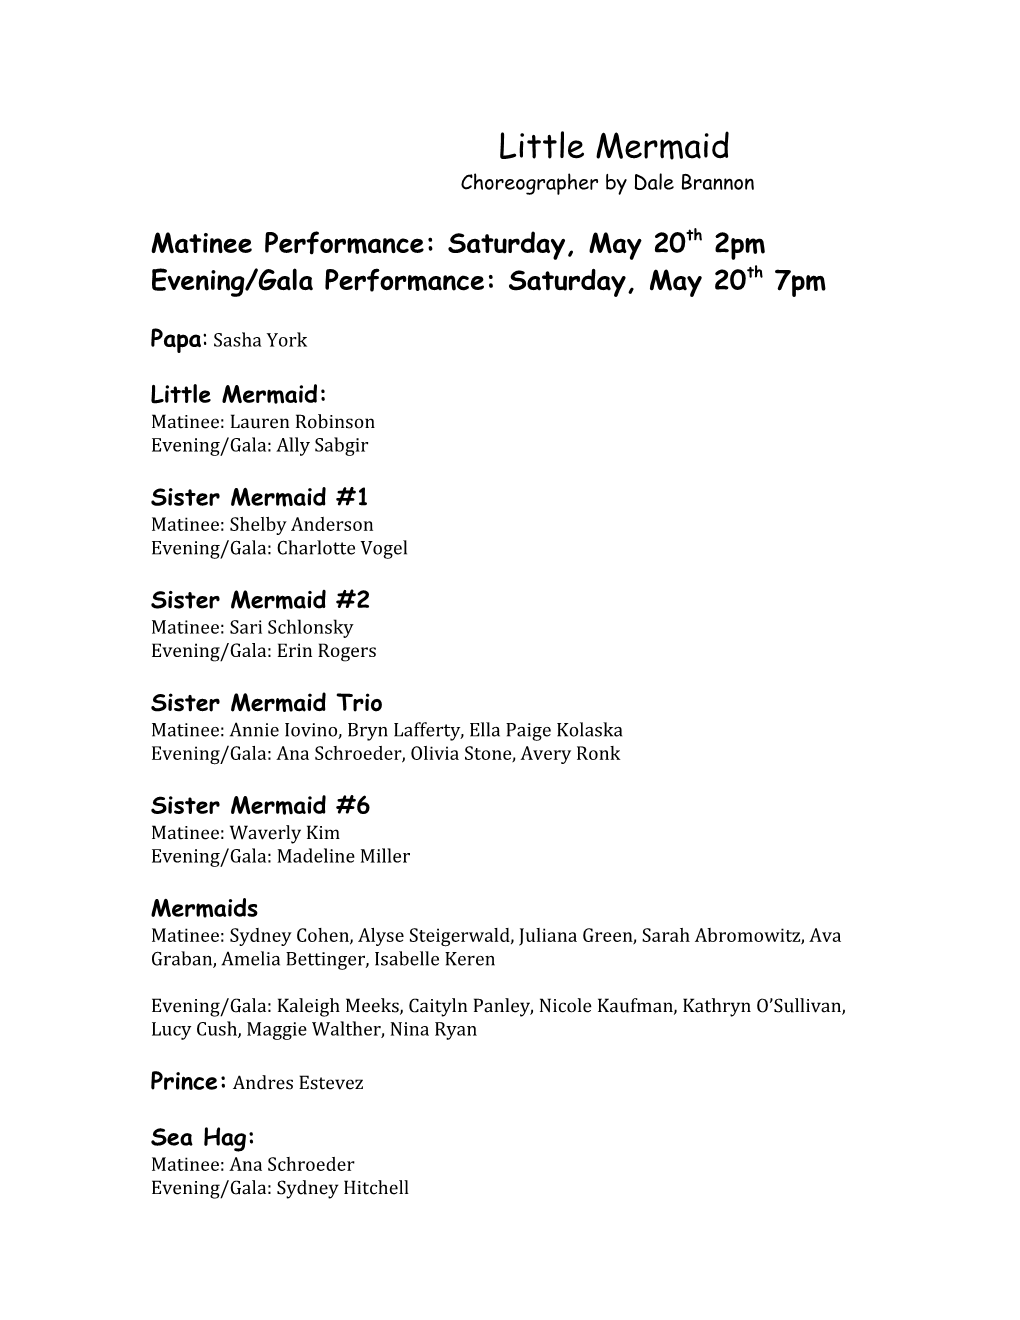 Matinee Performance: Saturday, May 20Th 2Pm